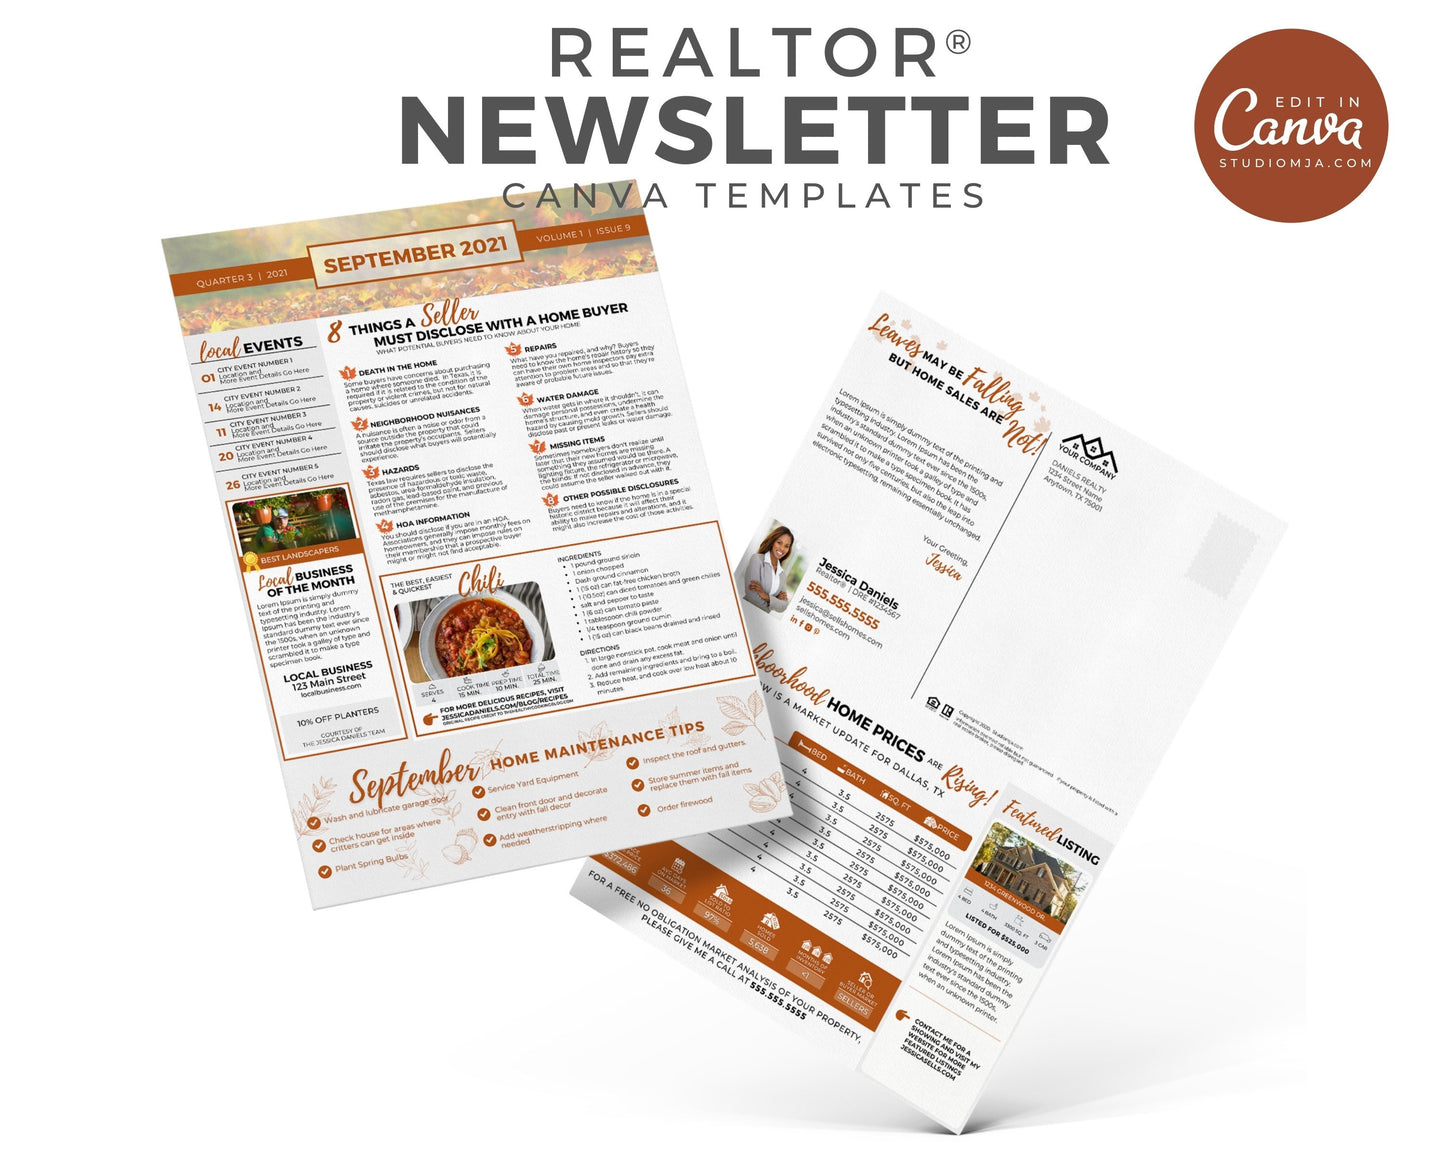 Realtor Newsletter Template - Bifold - 3rd Quarter Bundle